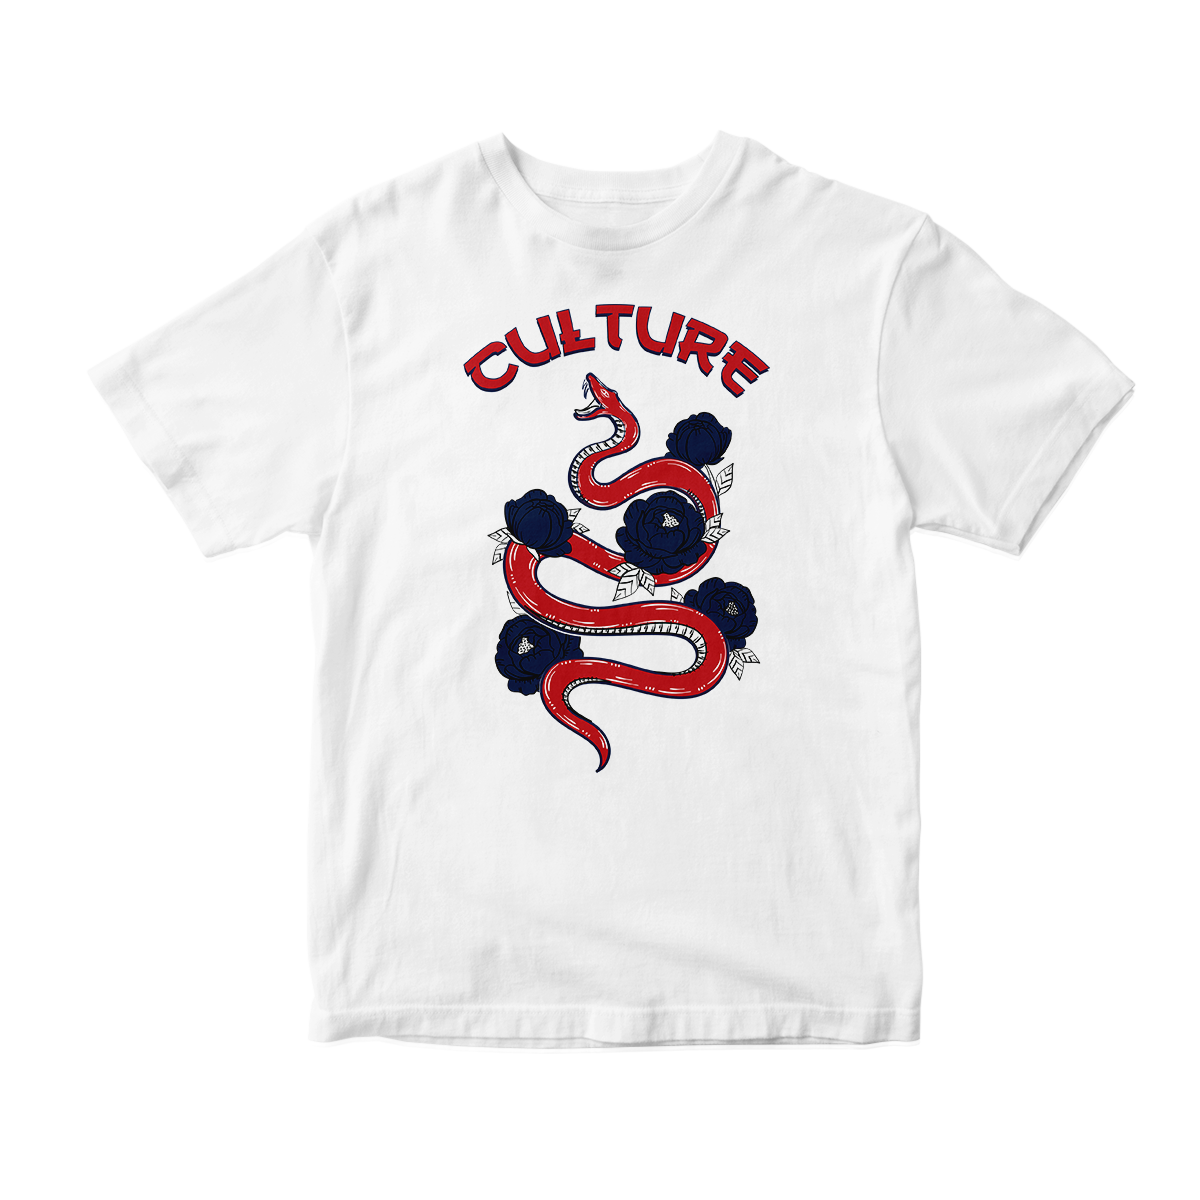 'Culture Snake' in FIBA 4 CW Unisex Short Sleeve Tee